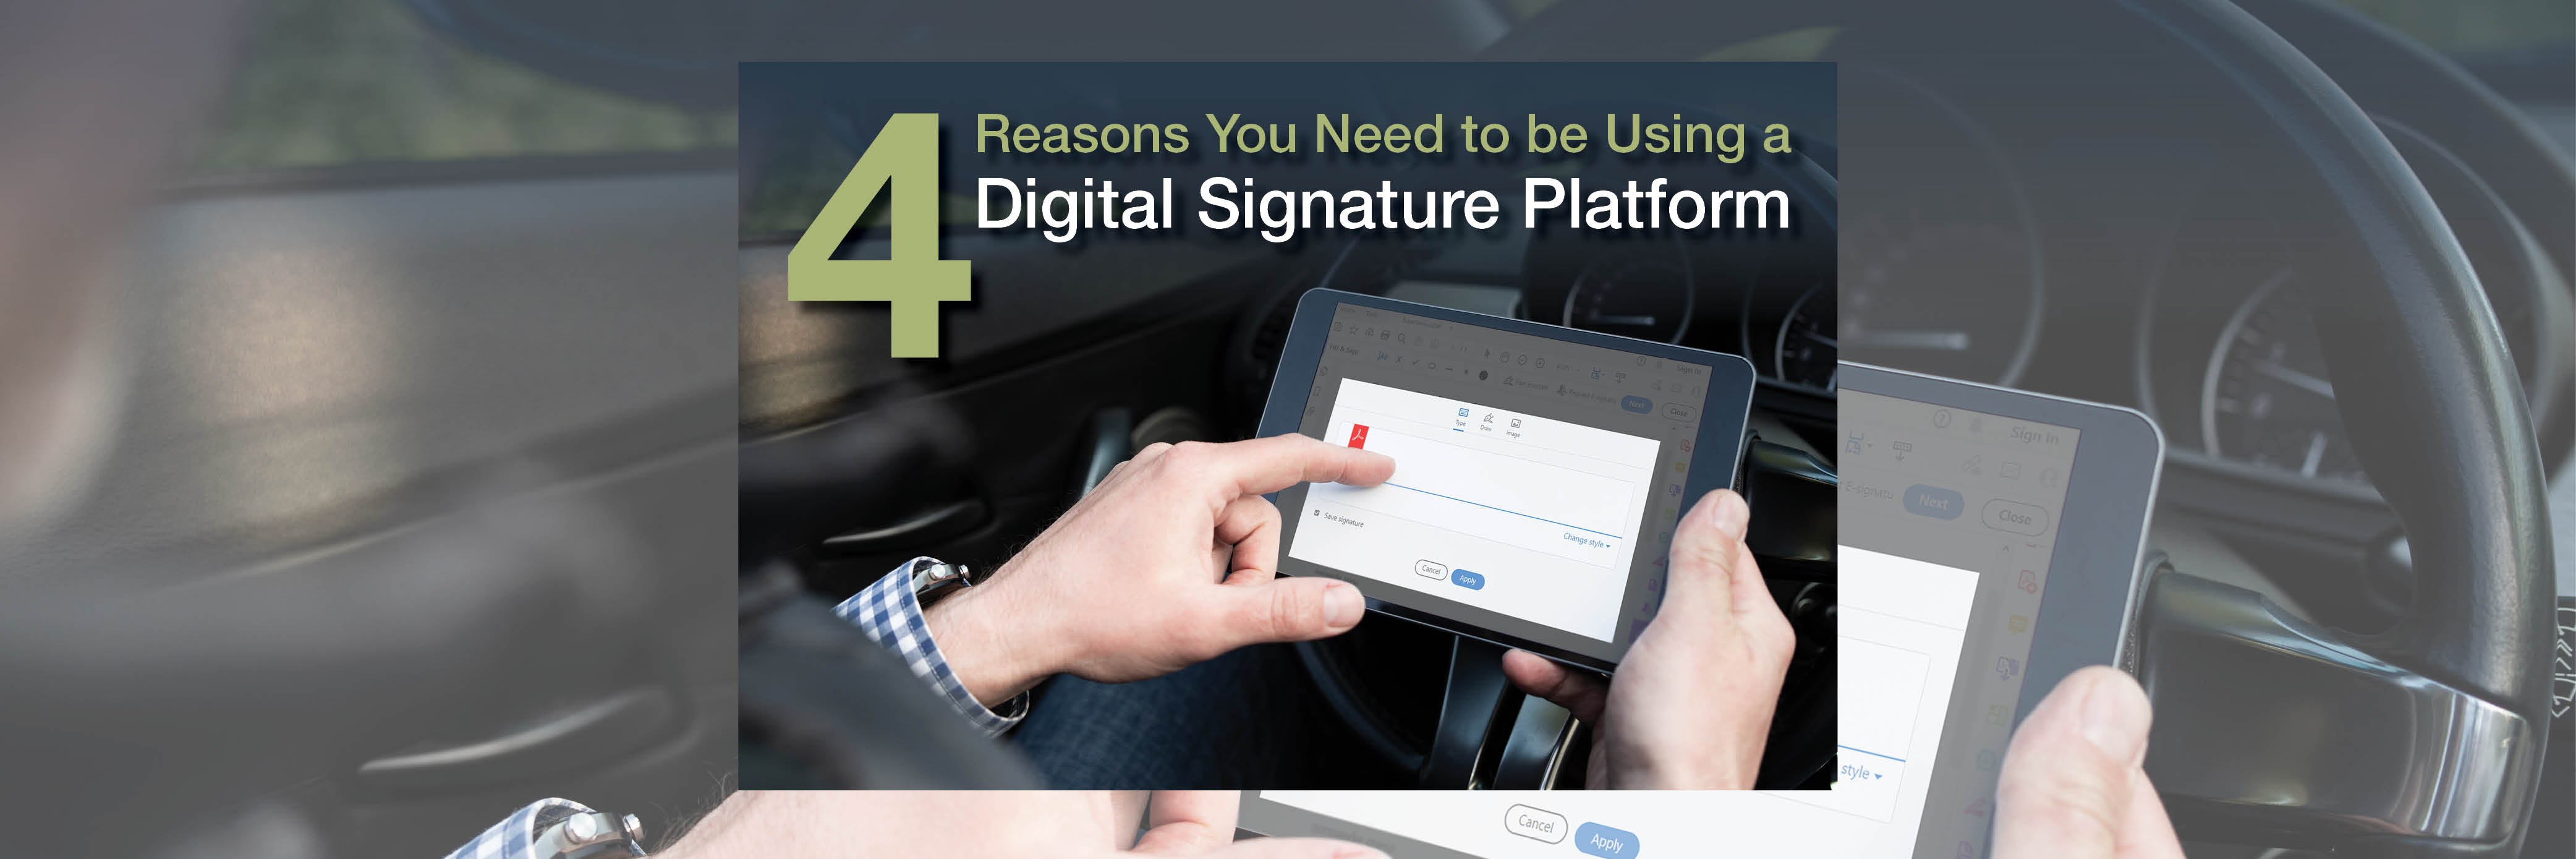 4 Reasons You Need to be Using a Digital Signature Platform